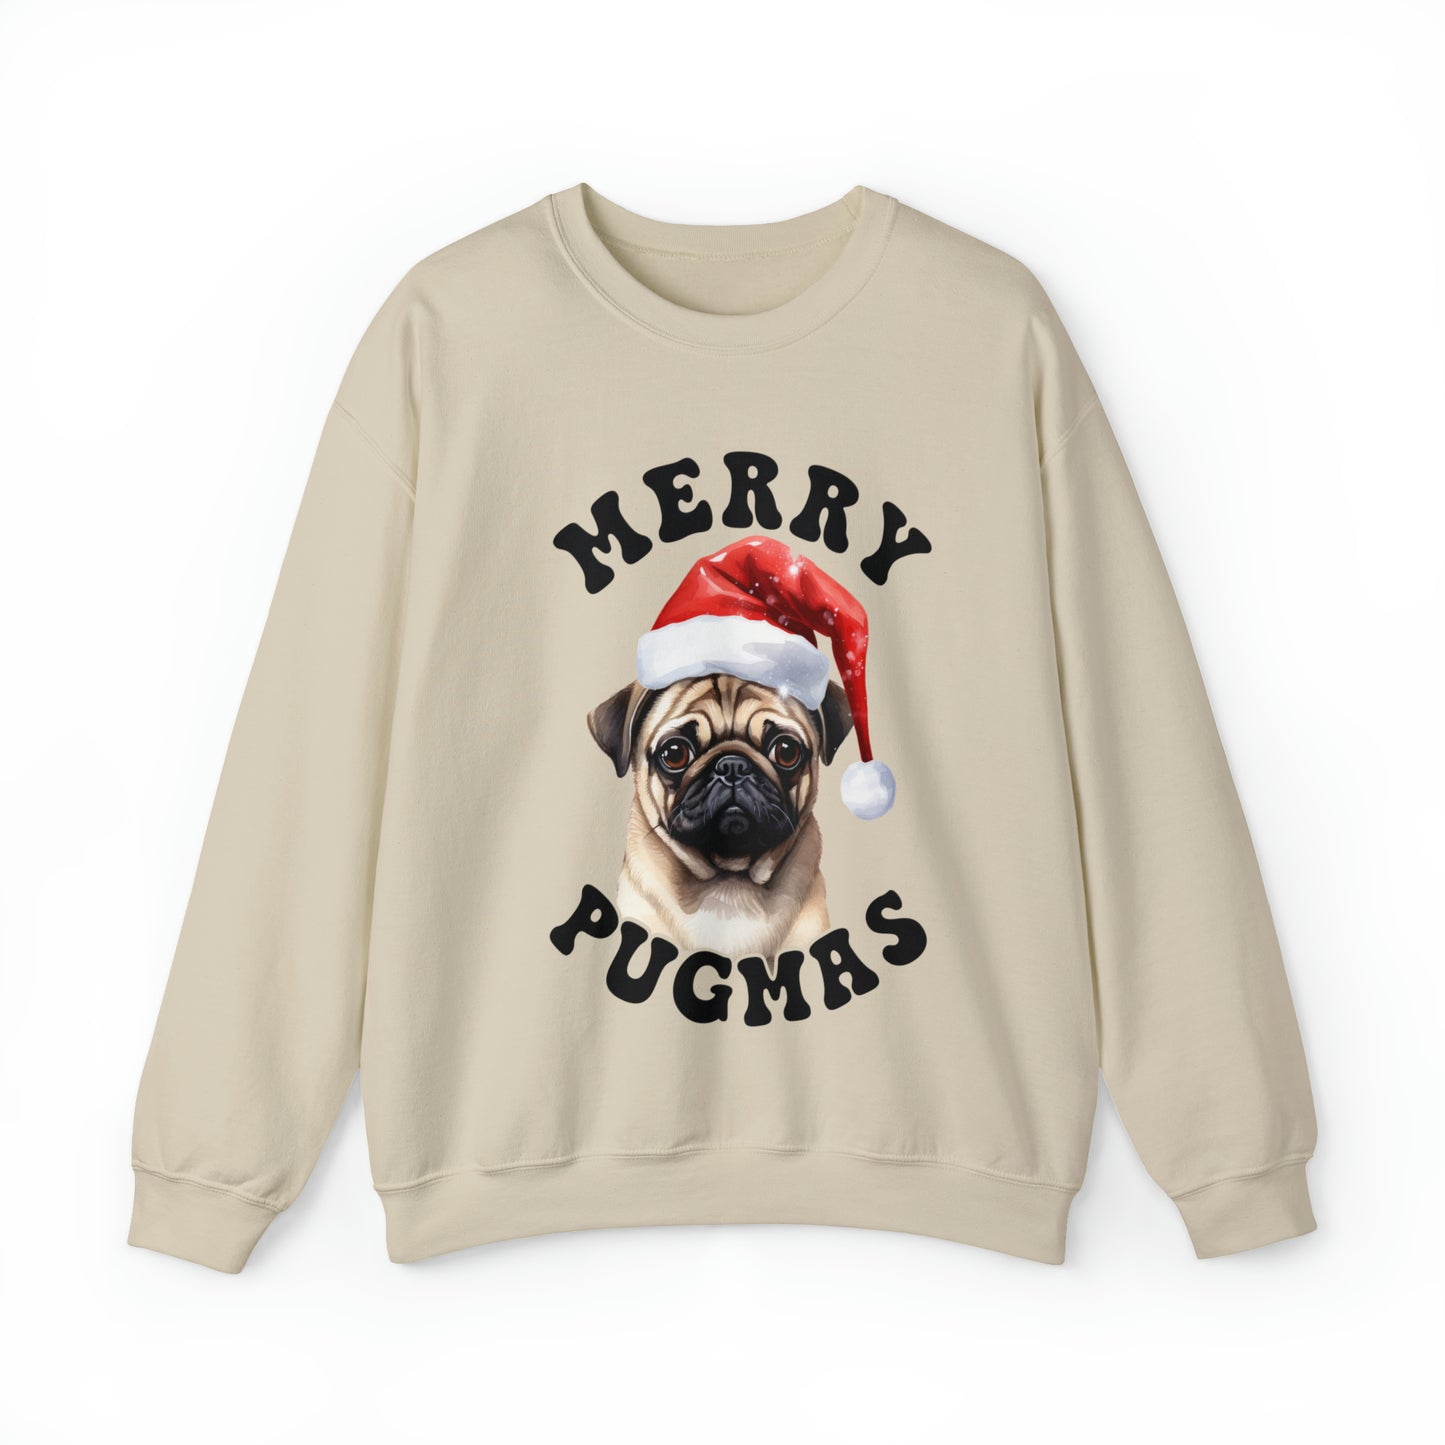 Merry Pugmas Adult Unisex Christmas Crewneck Sweatshirt